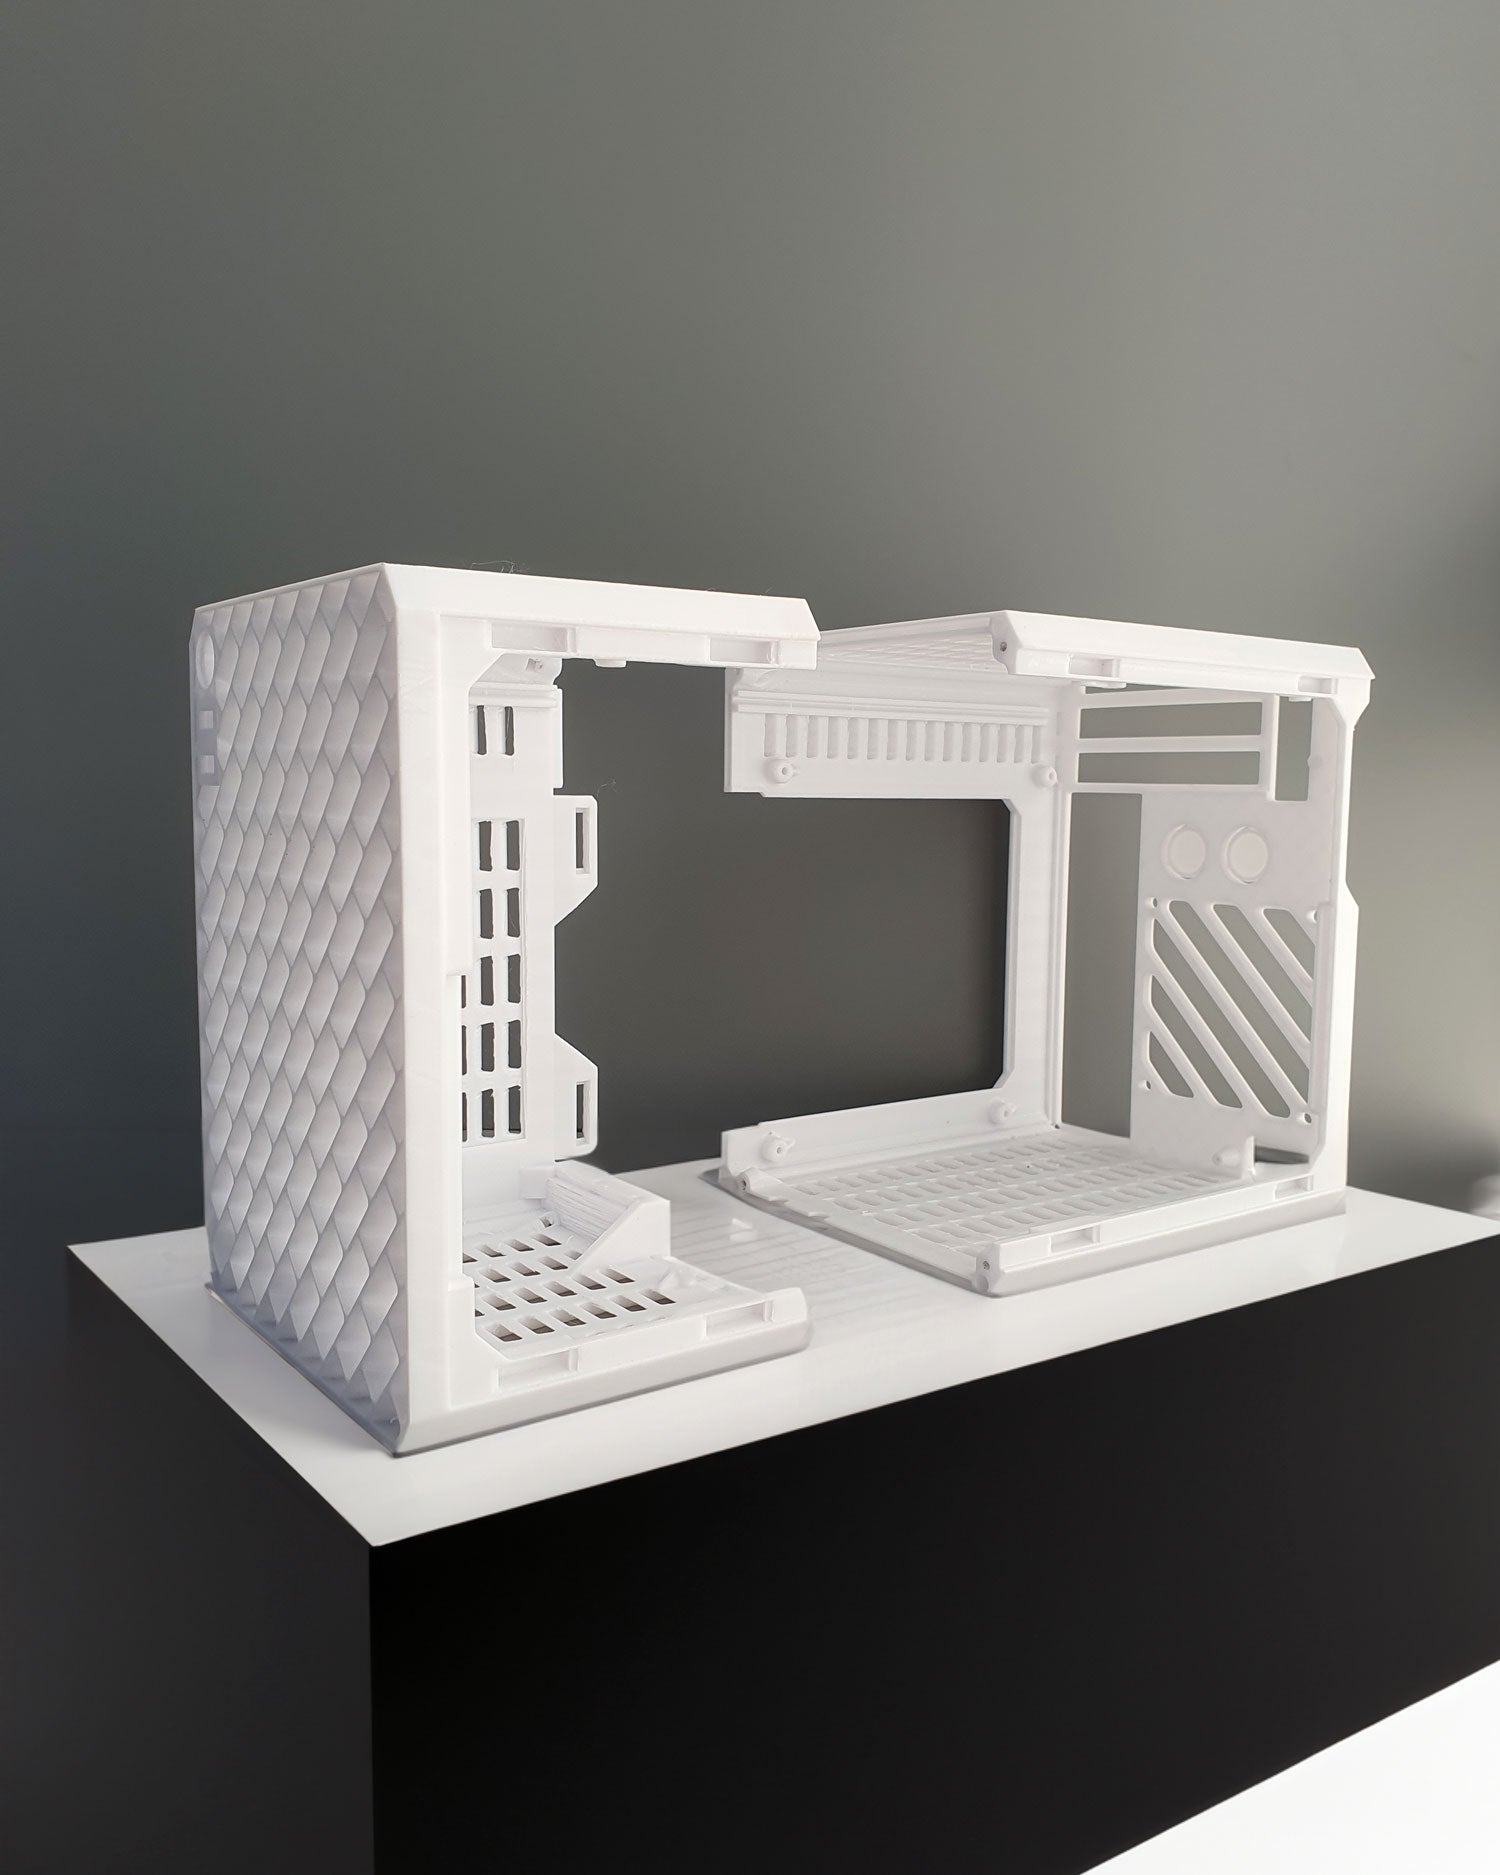 MODCASE EVOLUTION - 3D Printed PC CASE